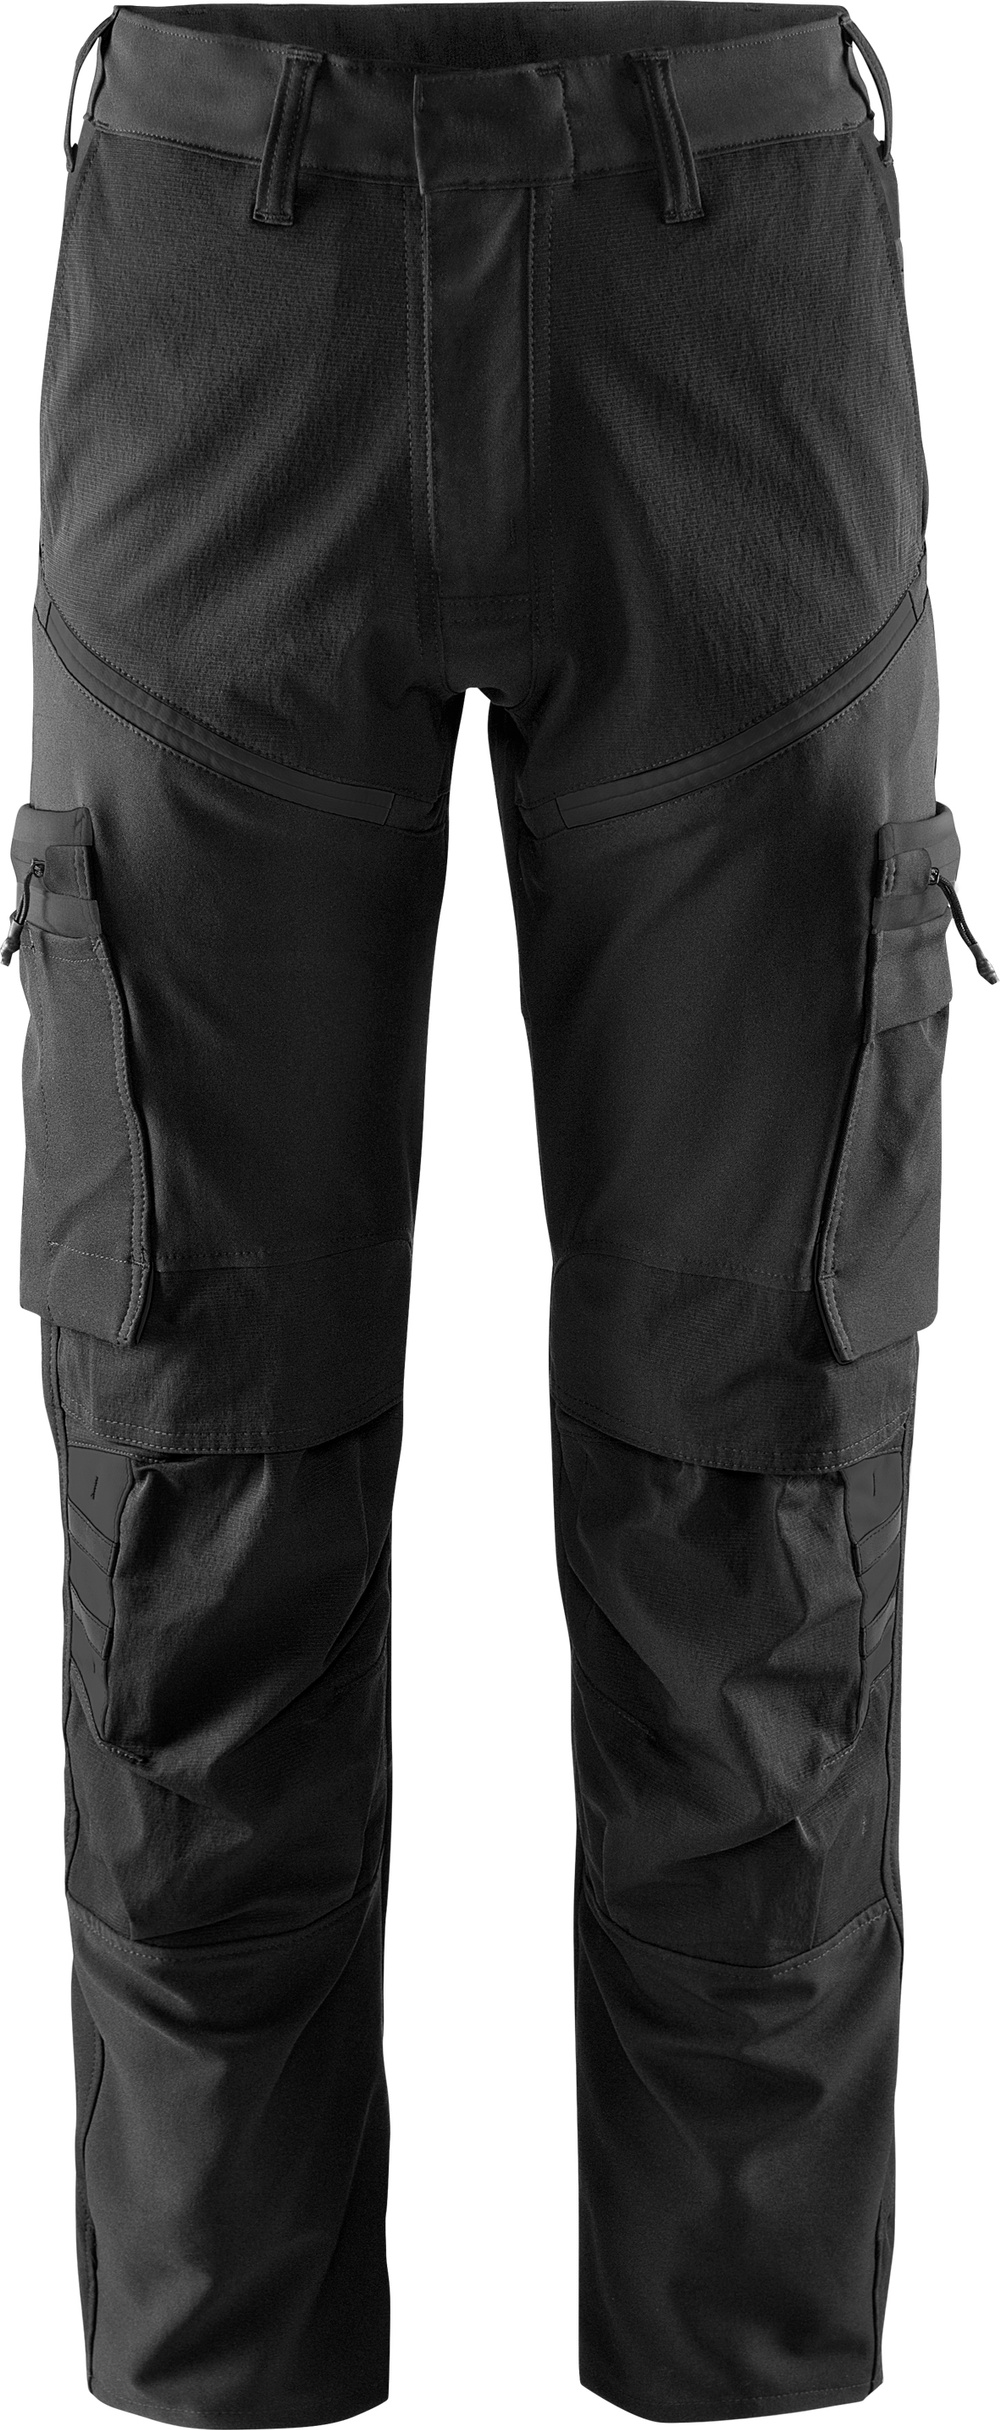 Stretch Trousers LWS 133394-940_940.jpg